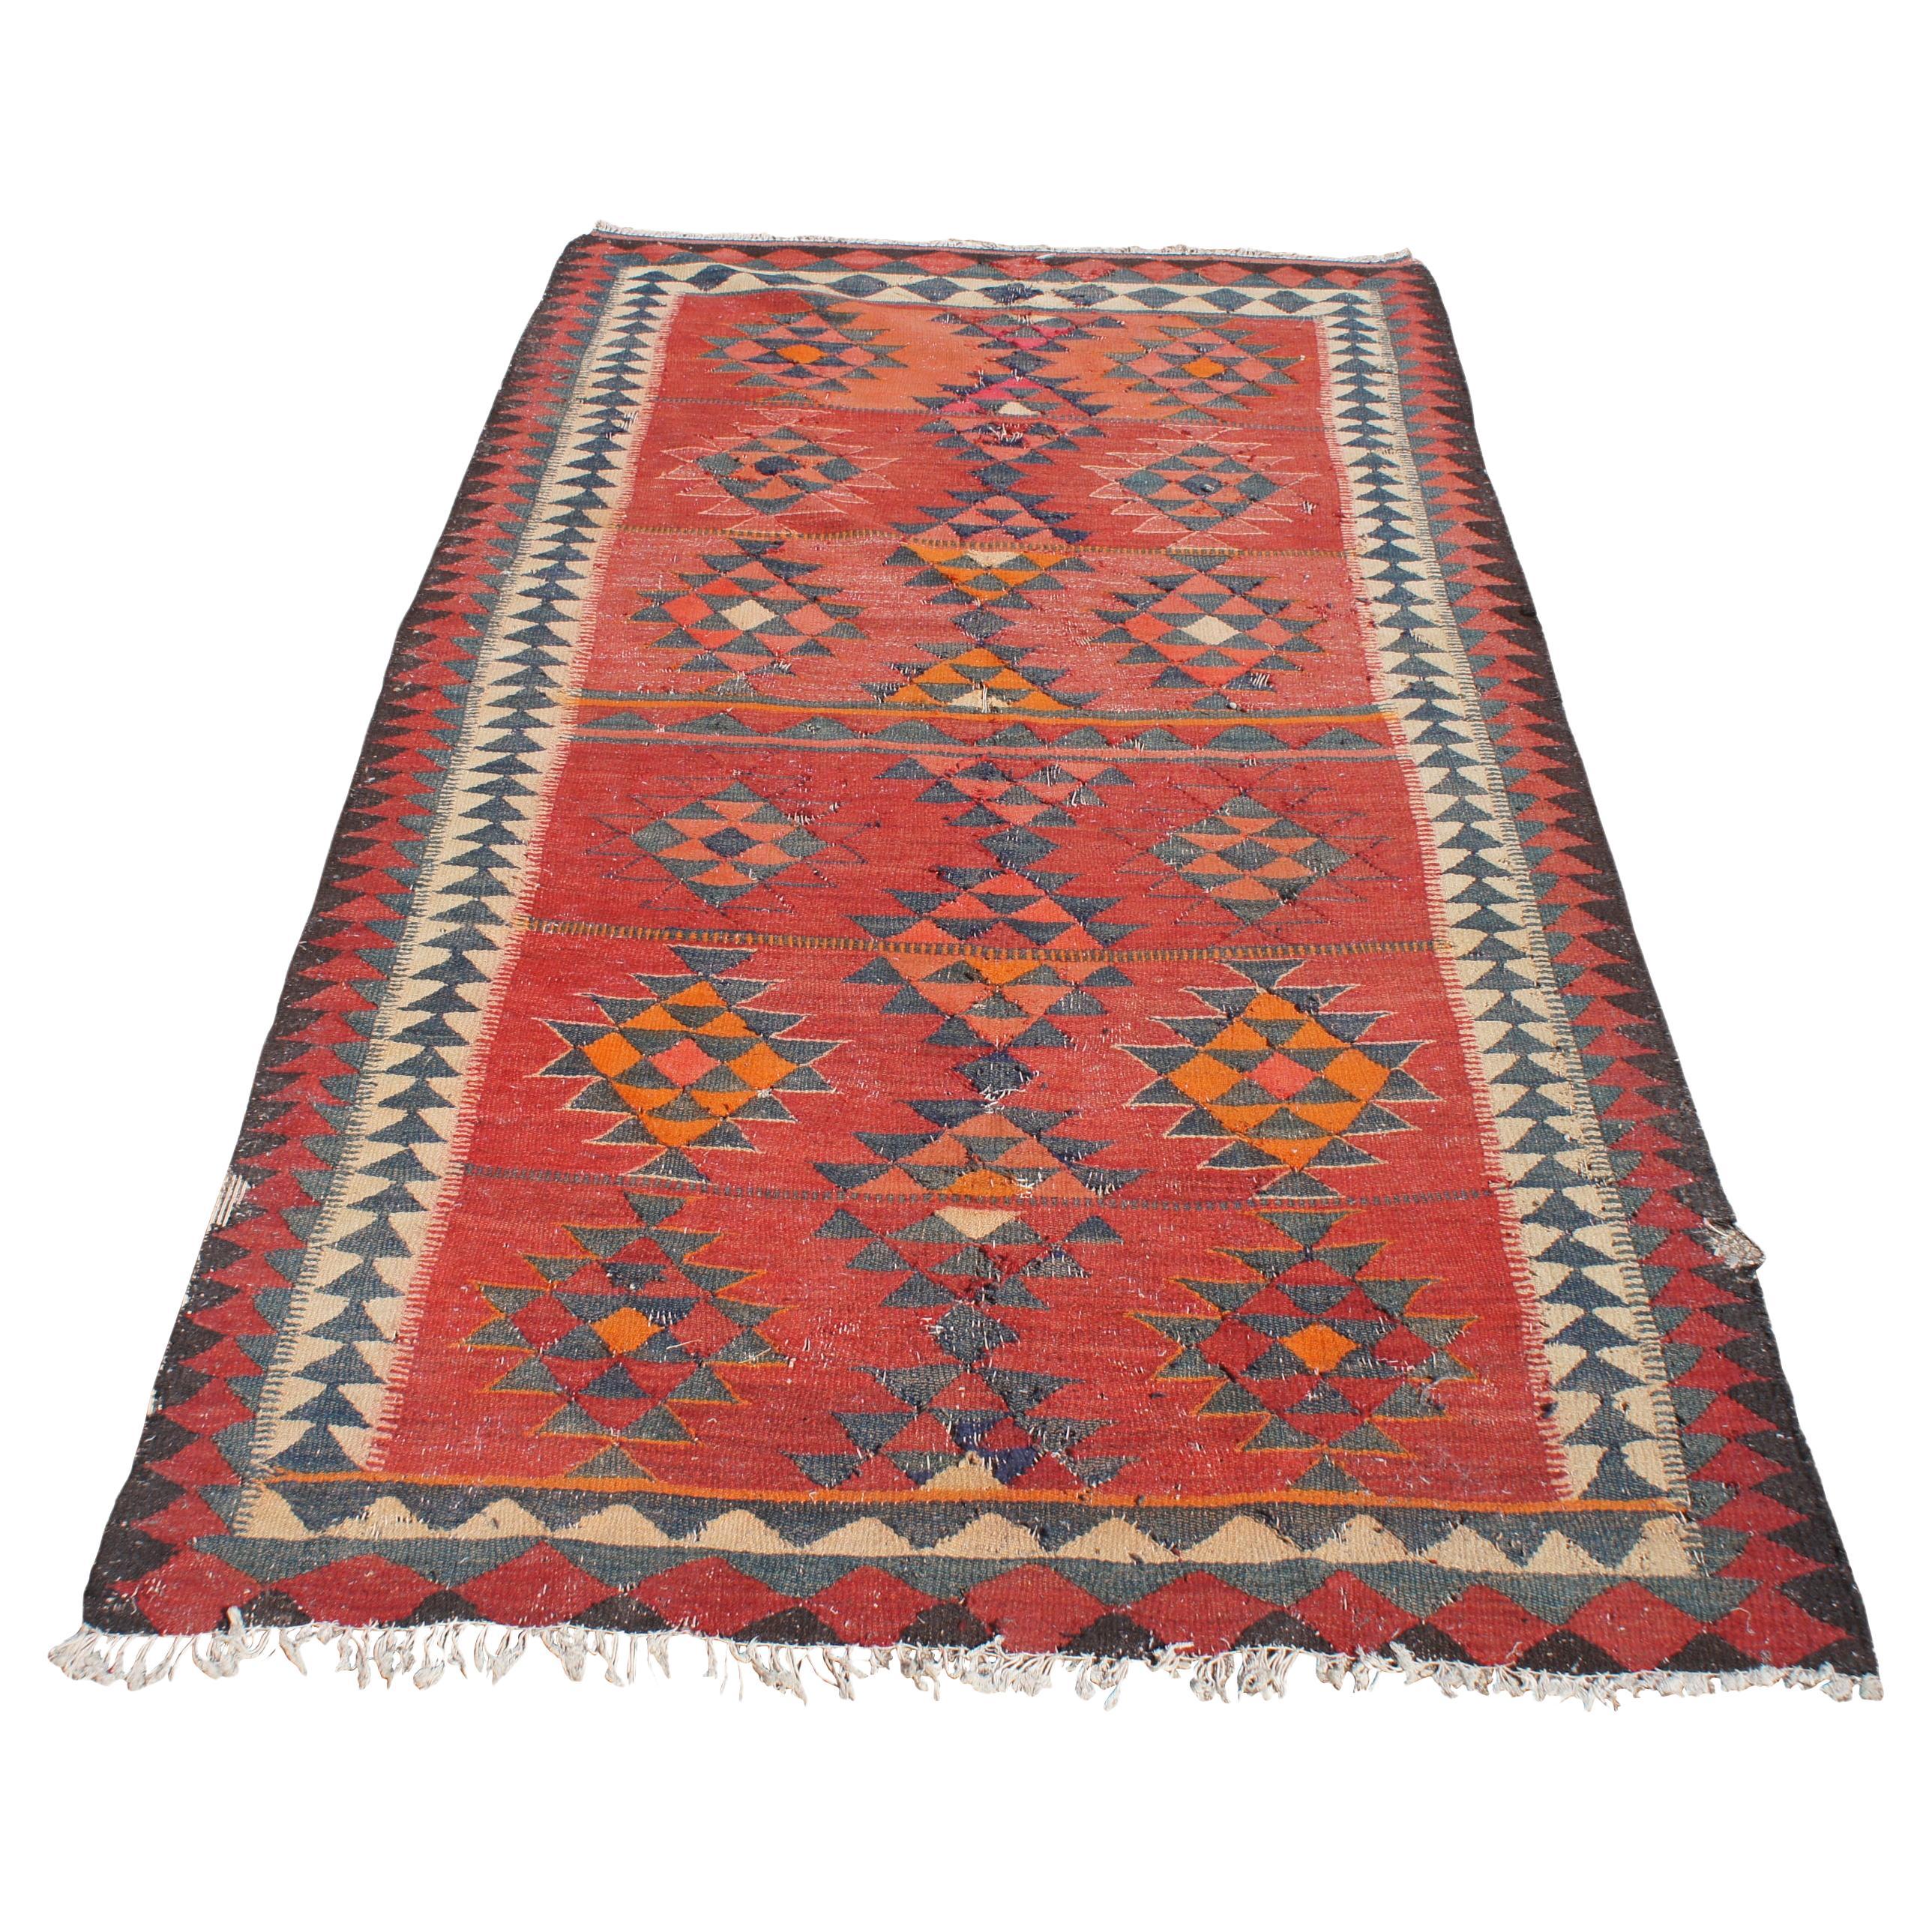 Vintage Turkish Flat Weave Oushak Bohemian Kilim Wool Area Rug Runner 5 x 8.5' For Sale